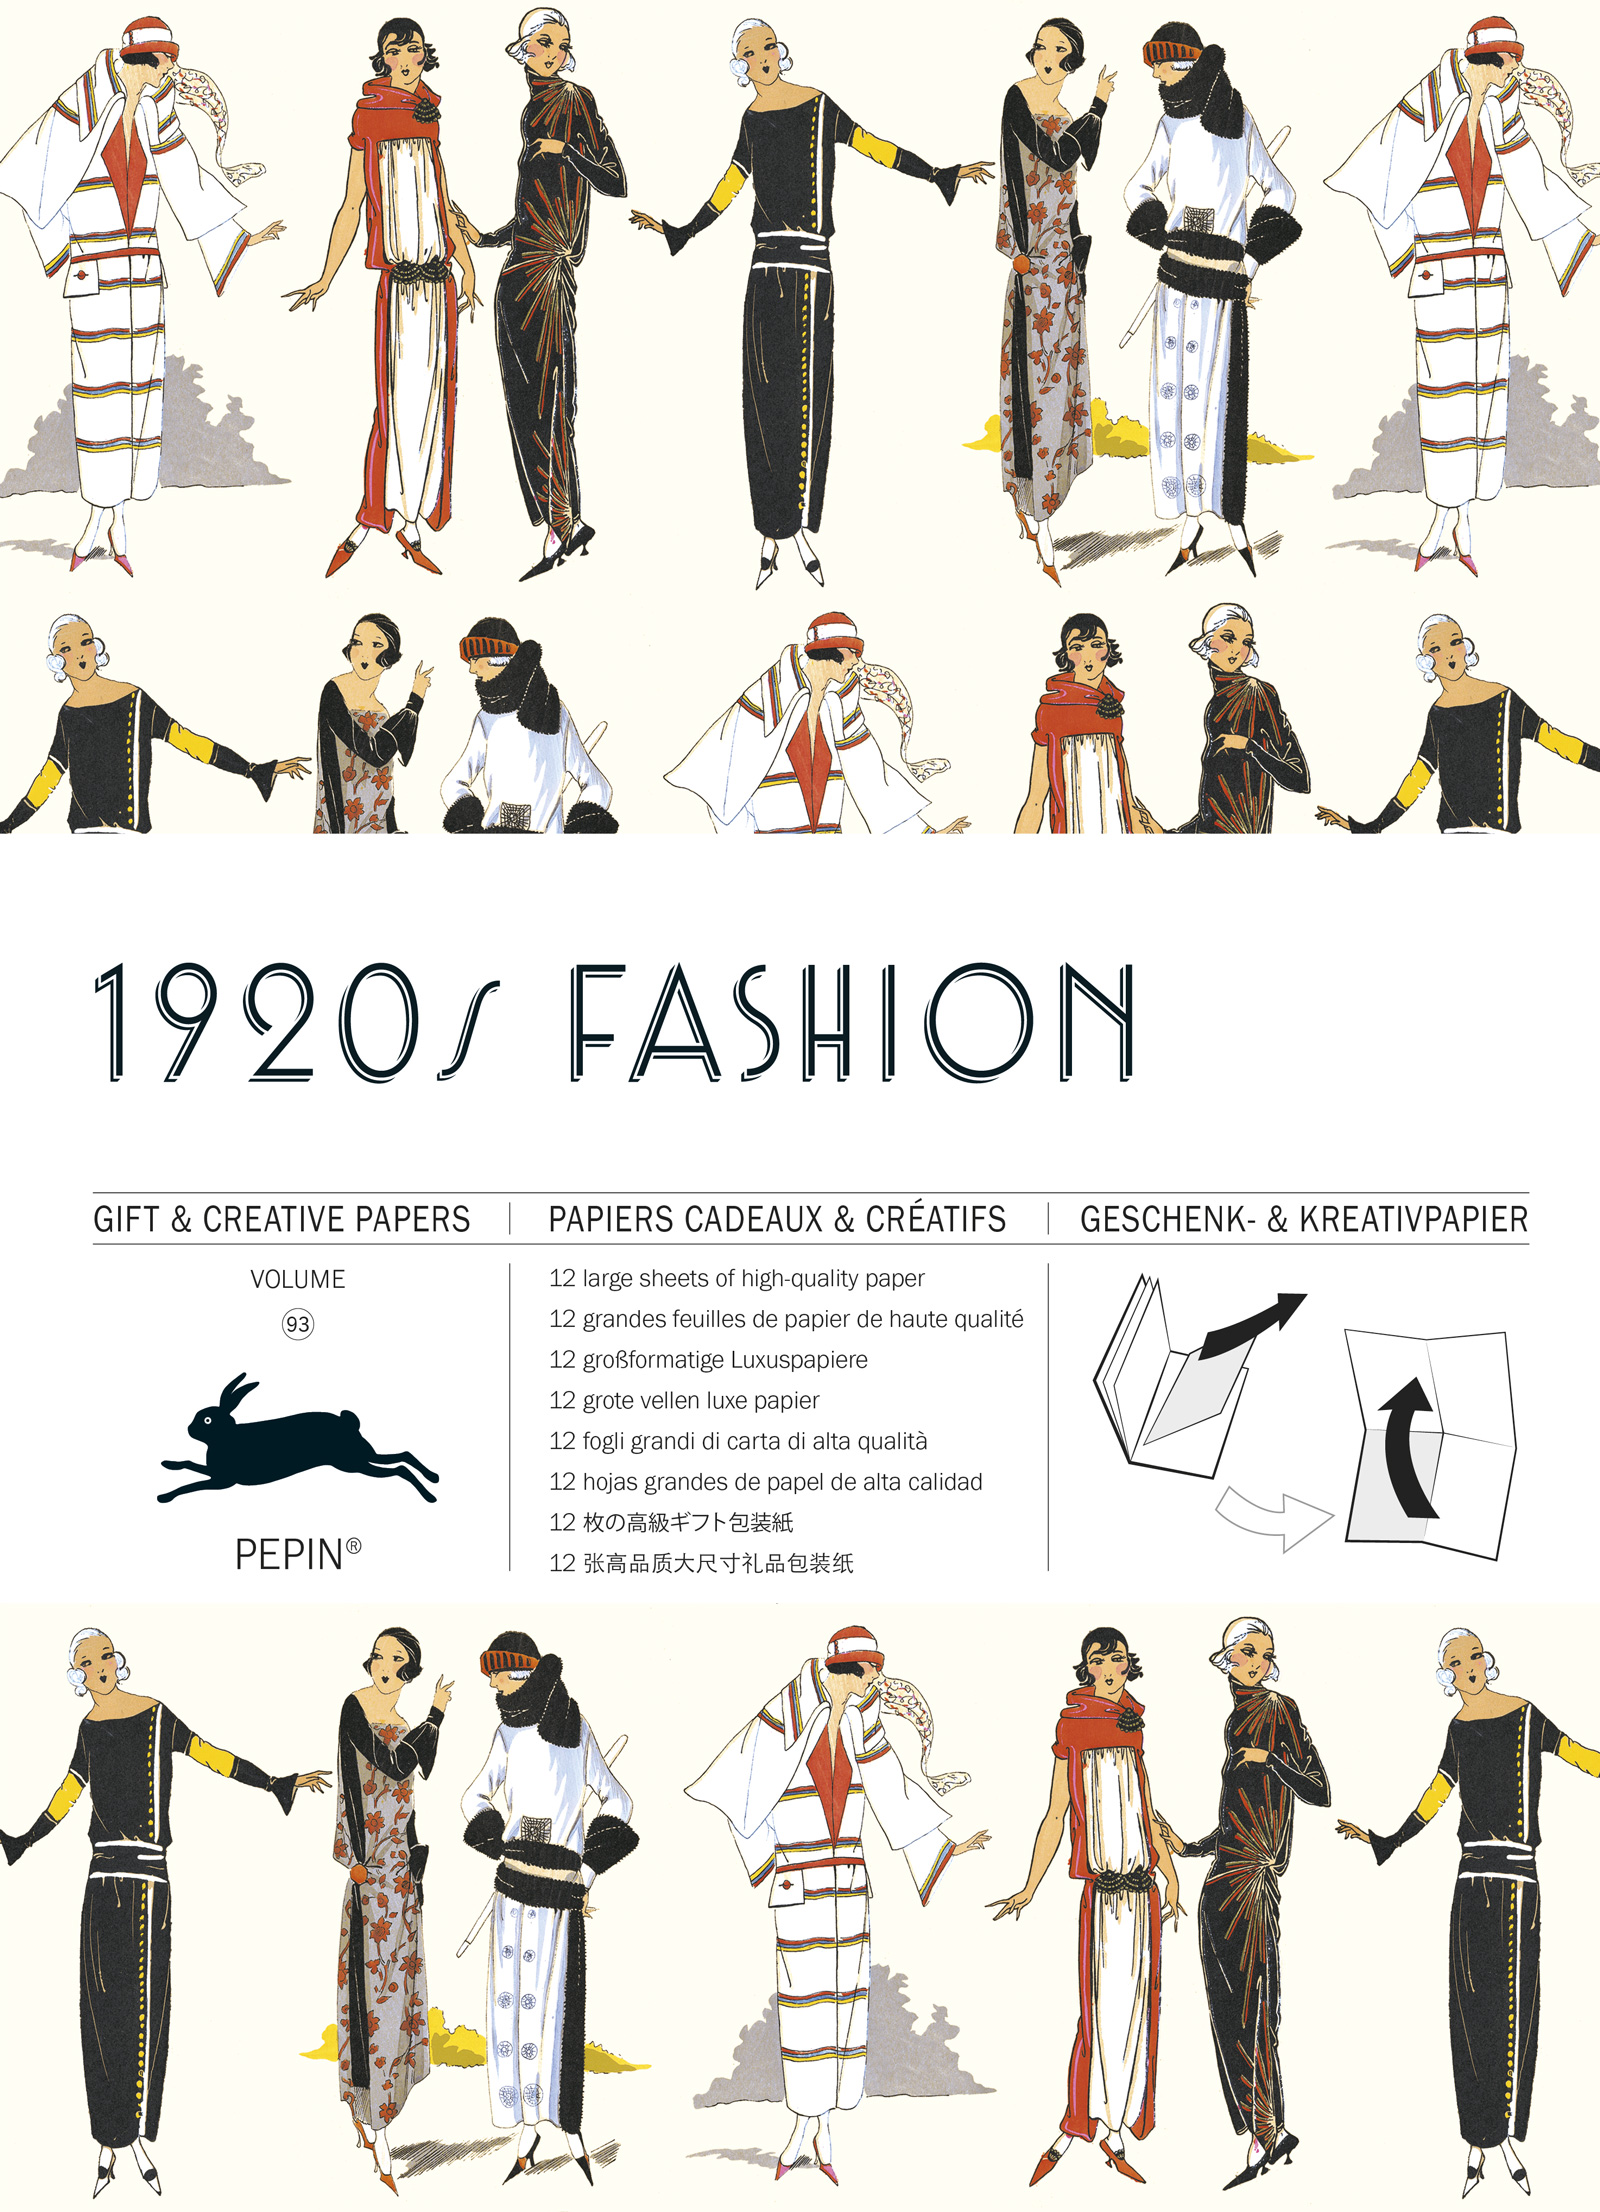 1920s Fashion Volume 93